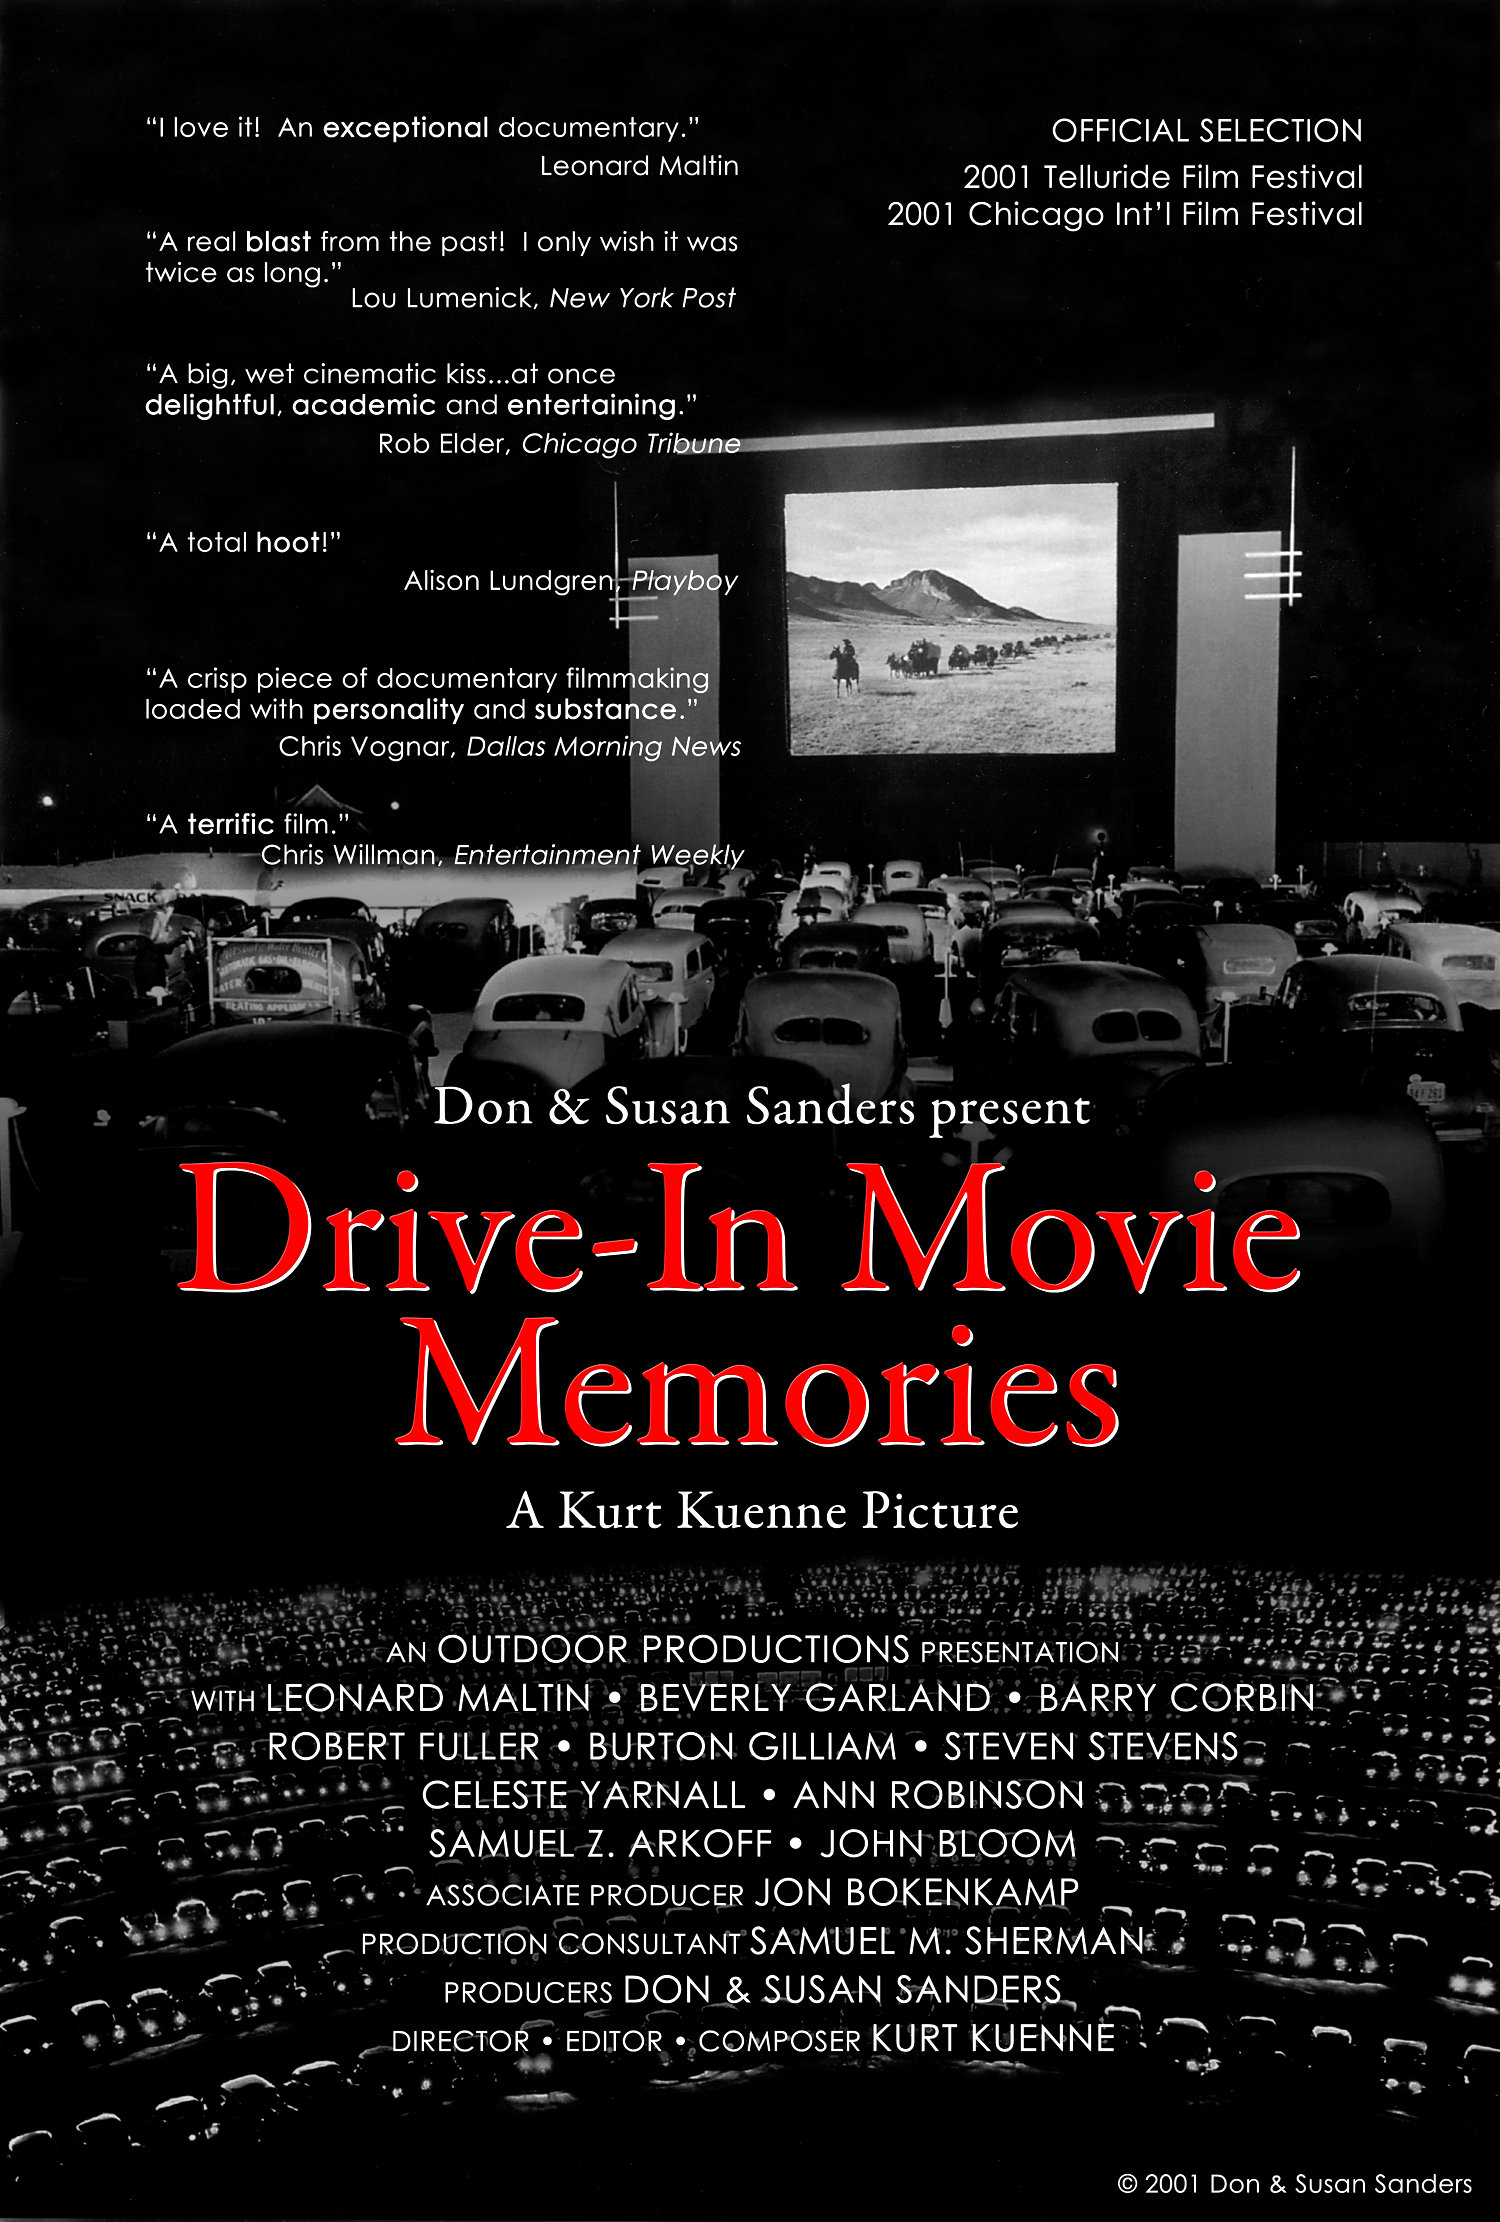 Drive-in Movie Memories (2001) Screenshot 1 